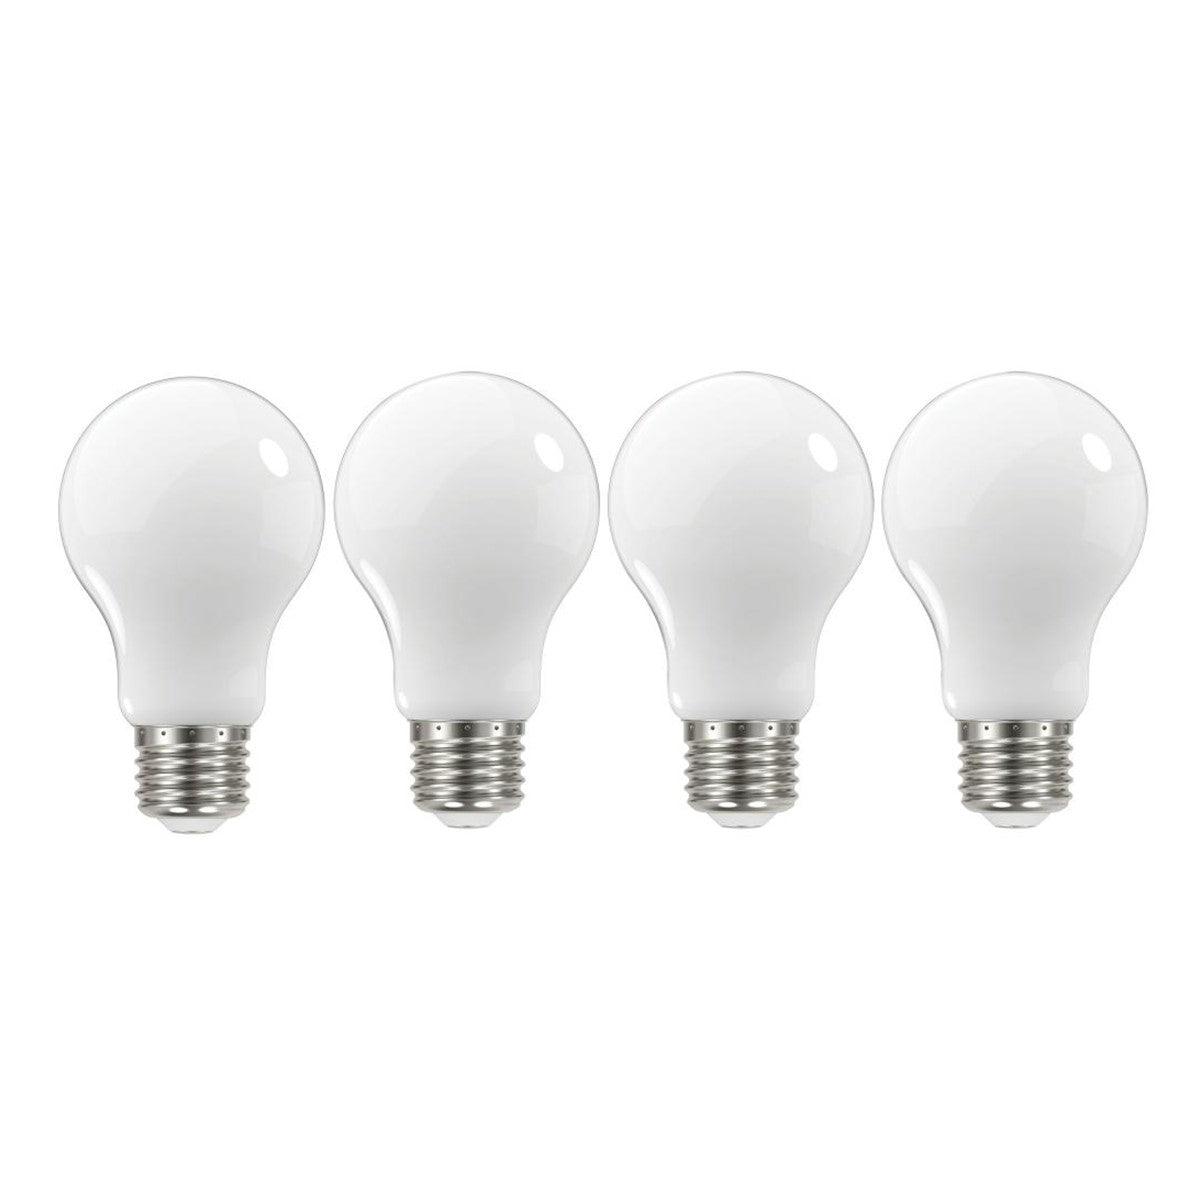 A19 LED Bulb, 75W Equivalent, 11 Watt, 1100 Lumens, 3000K, E26 Medium Base, Frosted Finish, Pack Of 4 - Bees Lighting